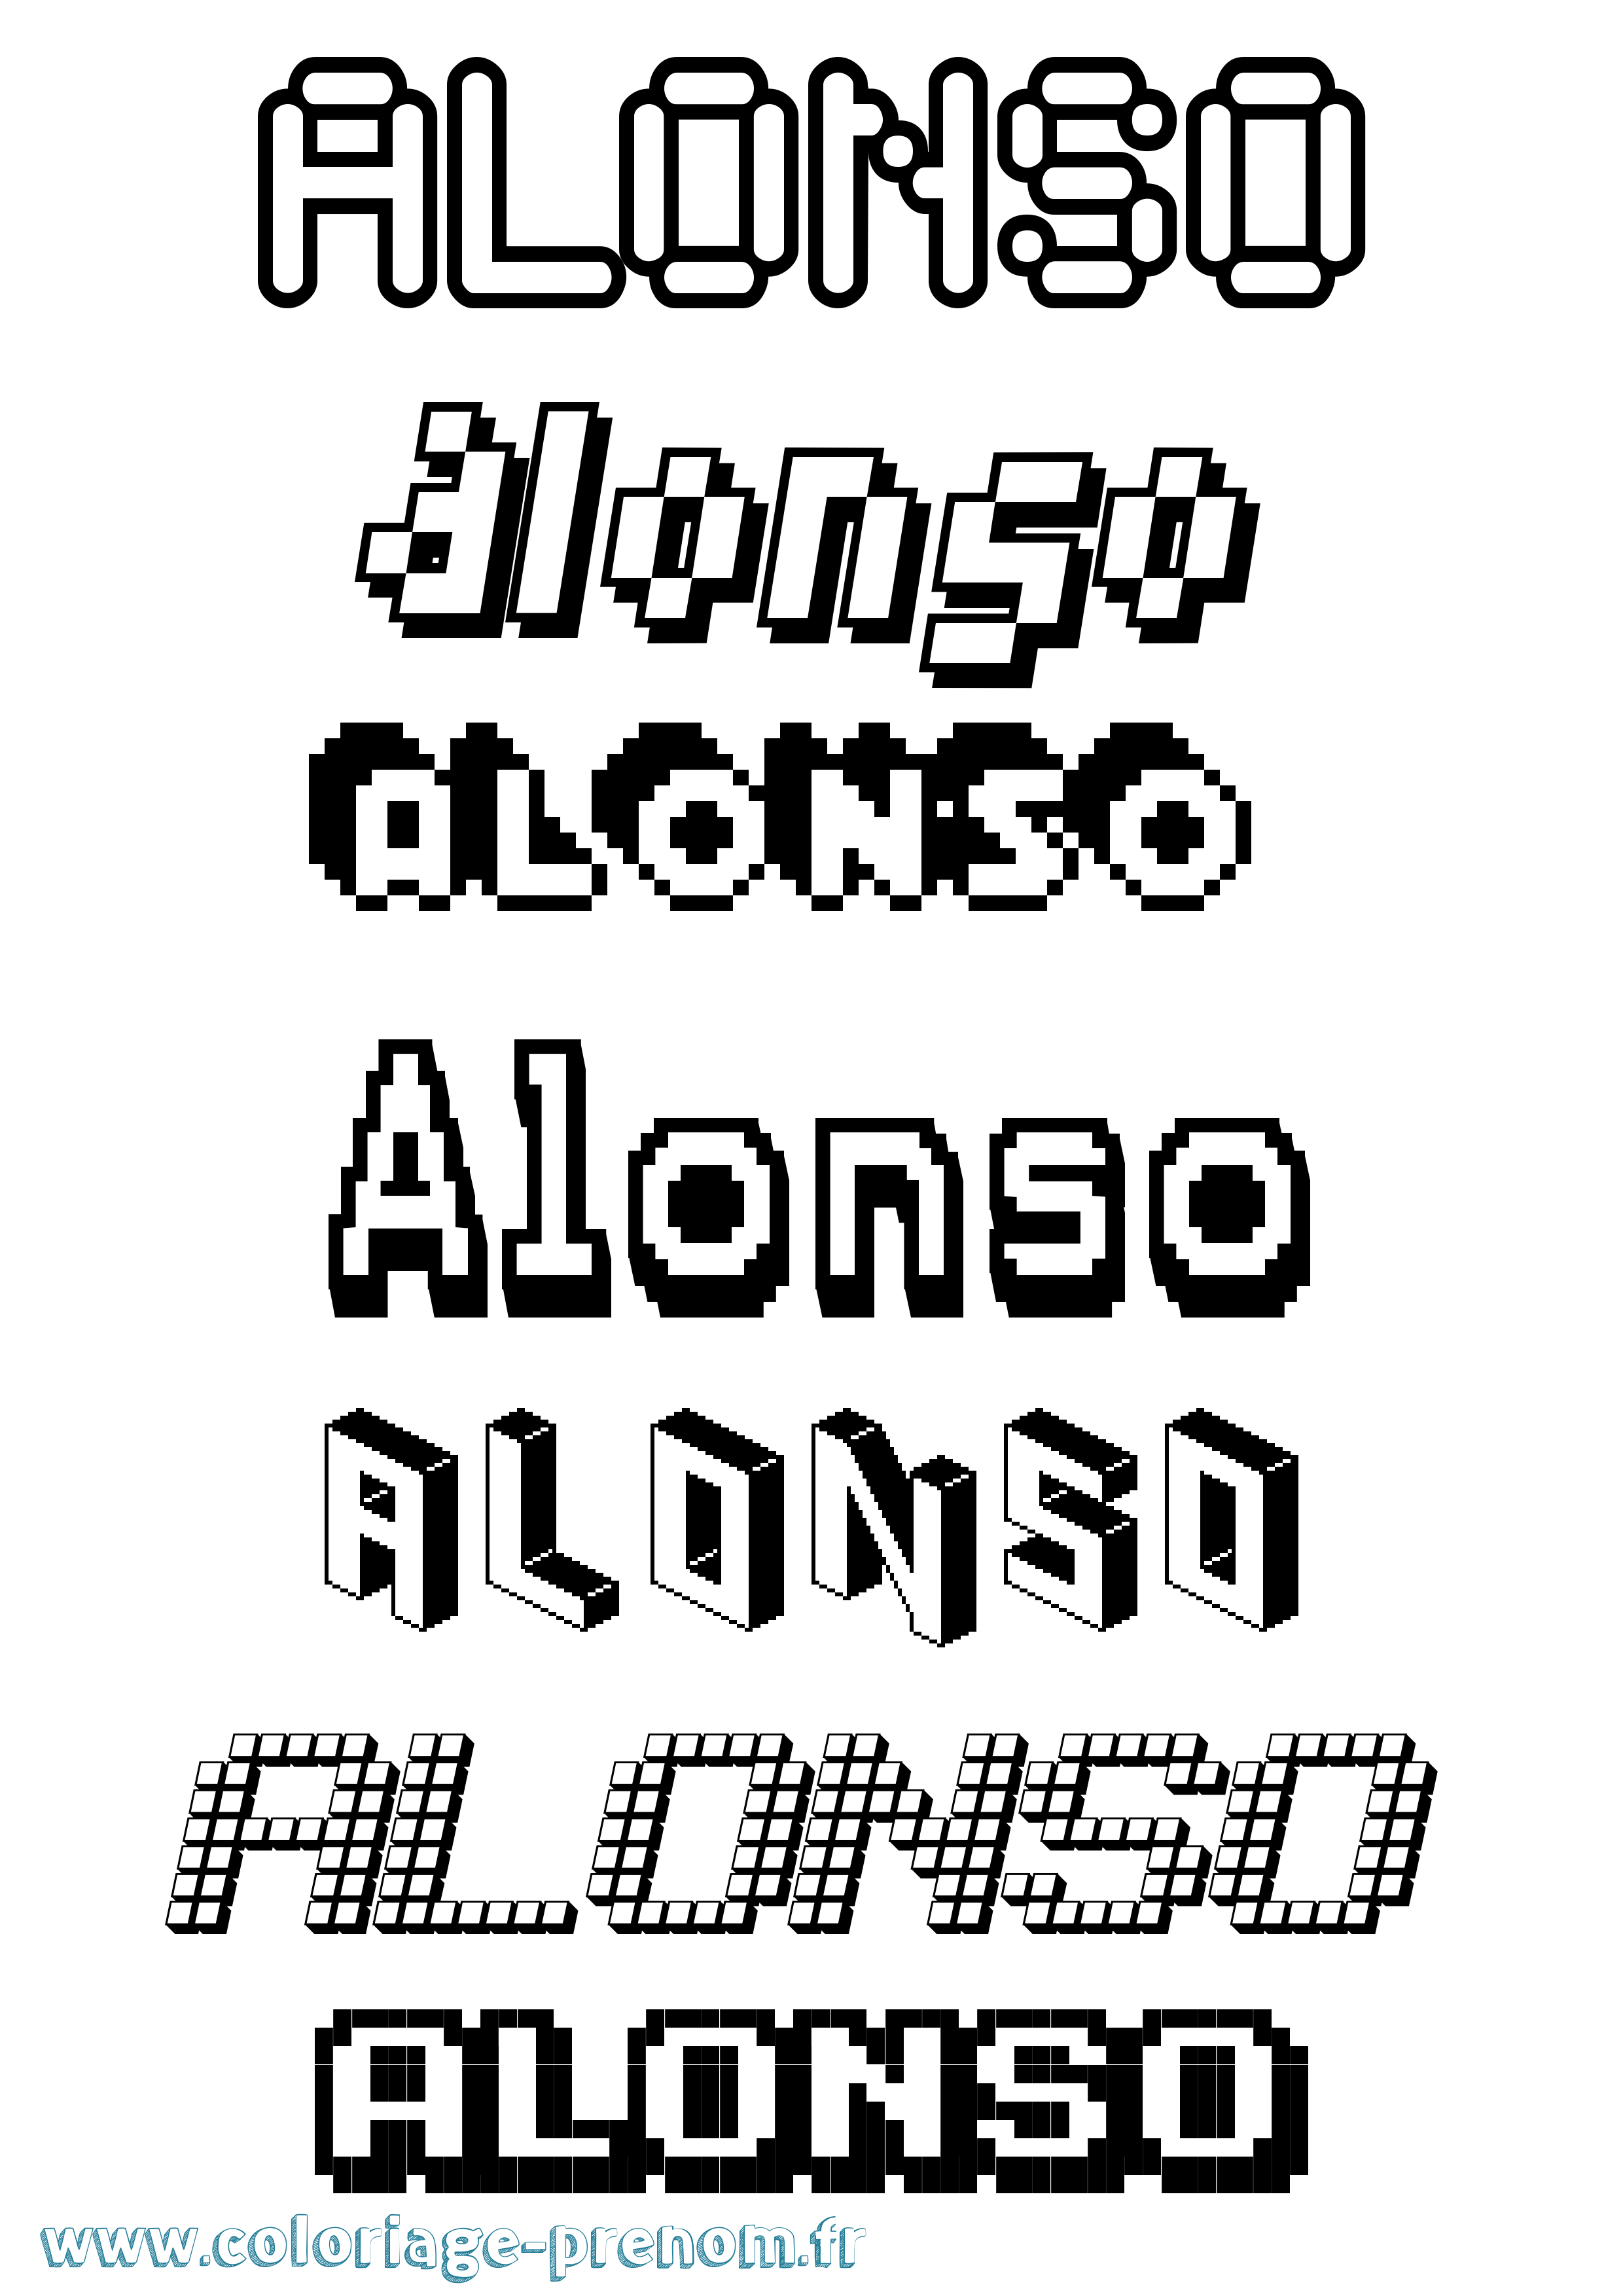 Coloriage prénom Alonso Pixel